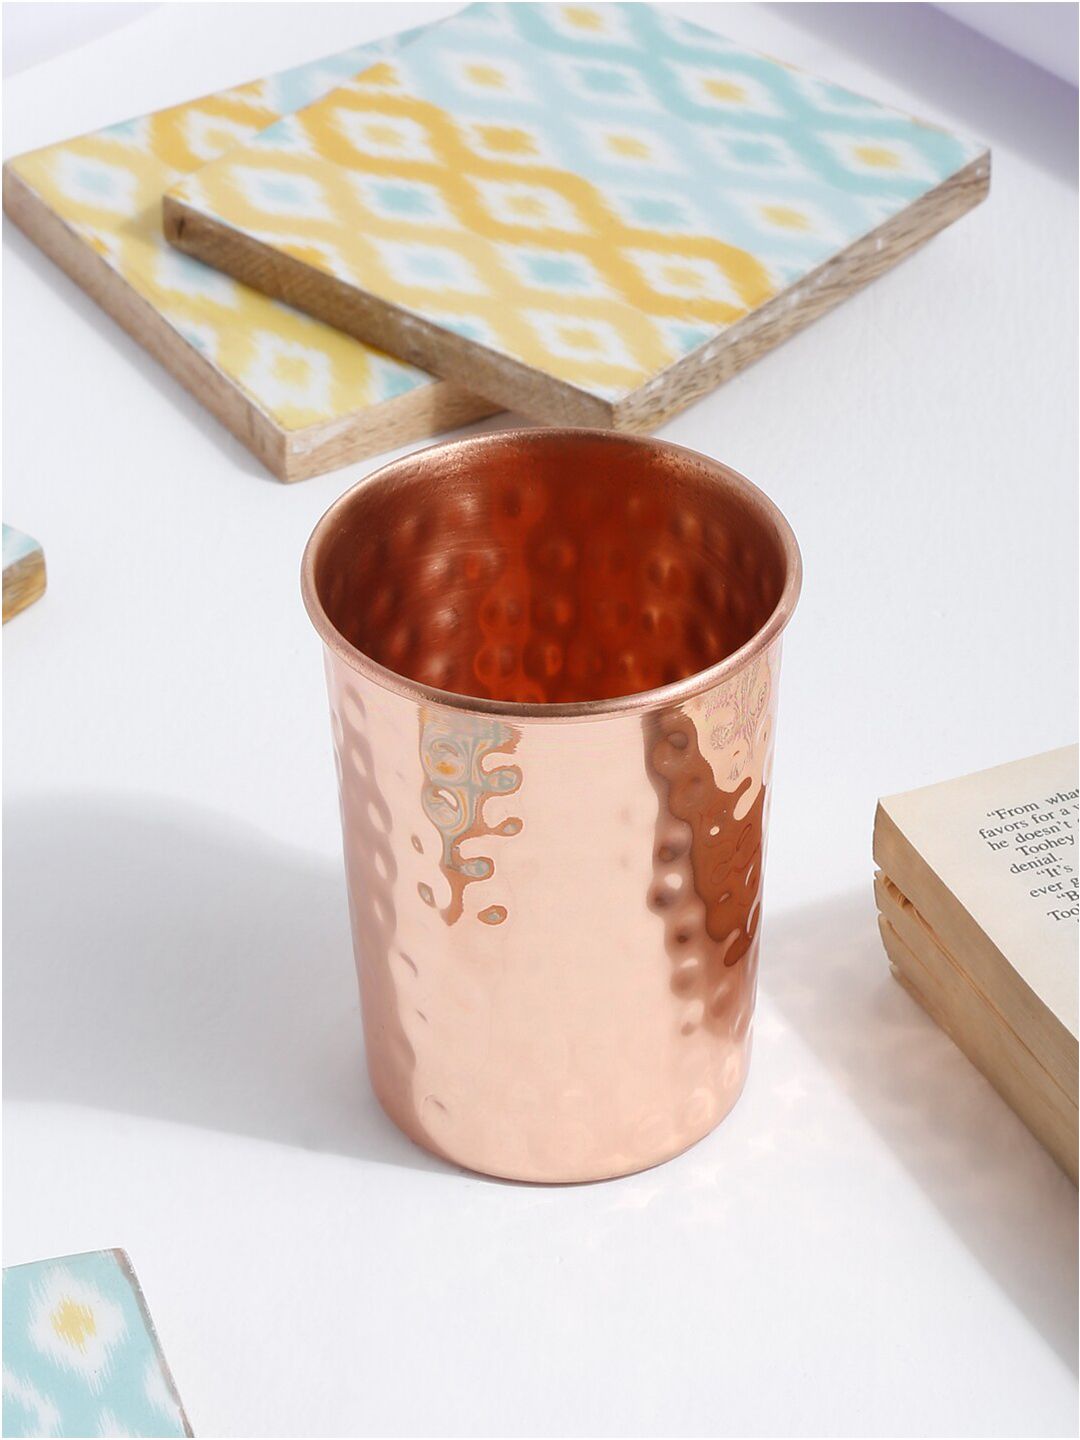 EK BY EKTA KAPOOR Copper-Toned Textured Copper Water Glass Price in India